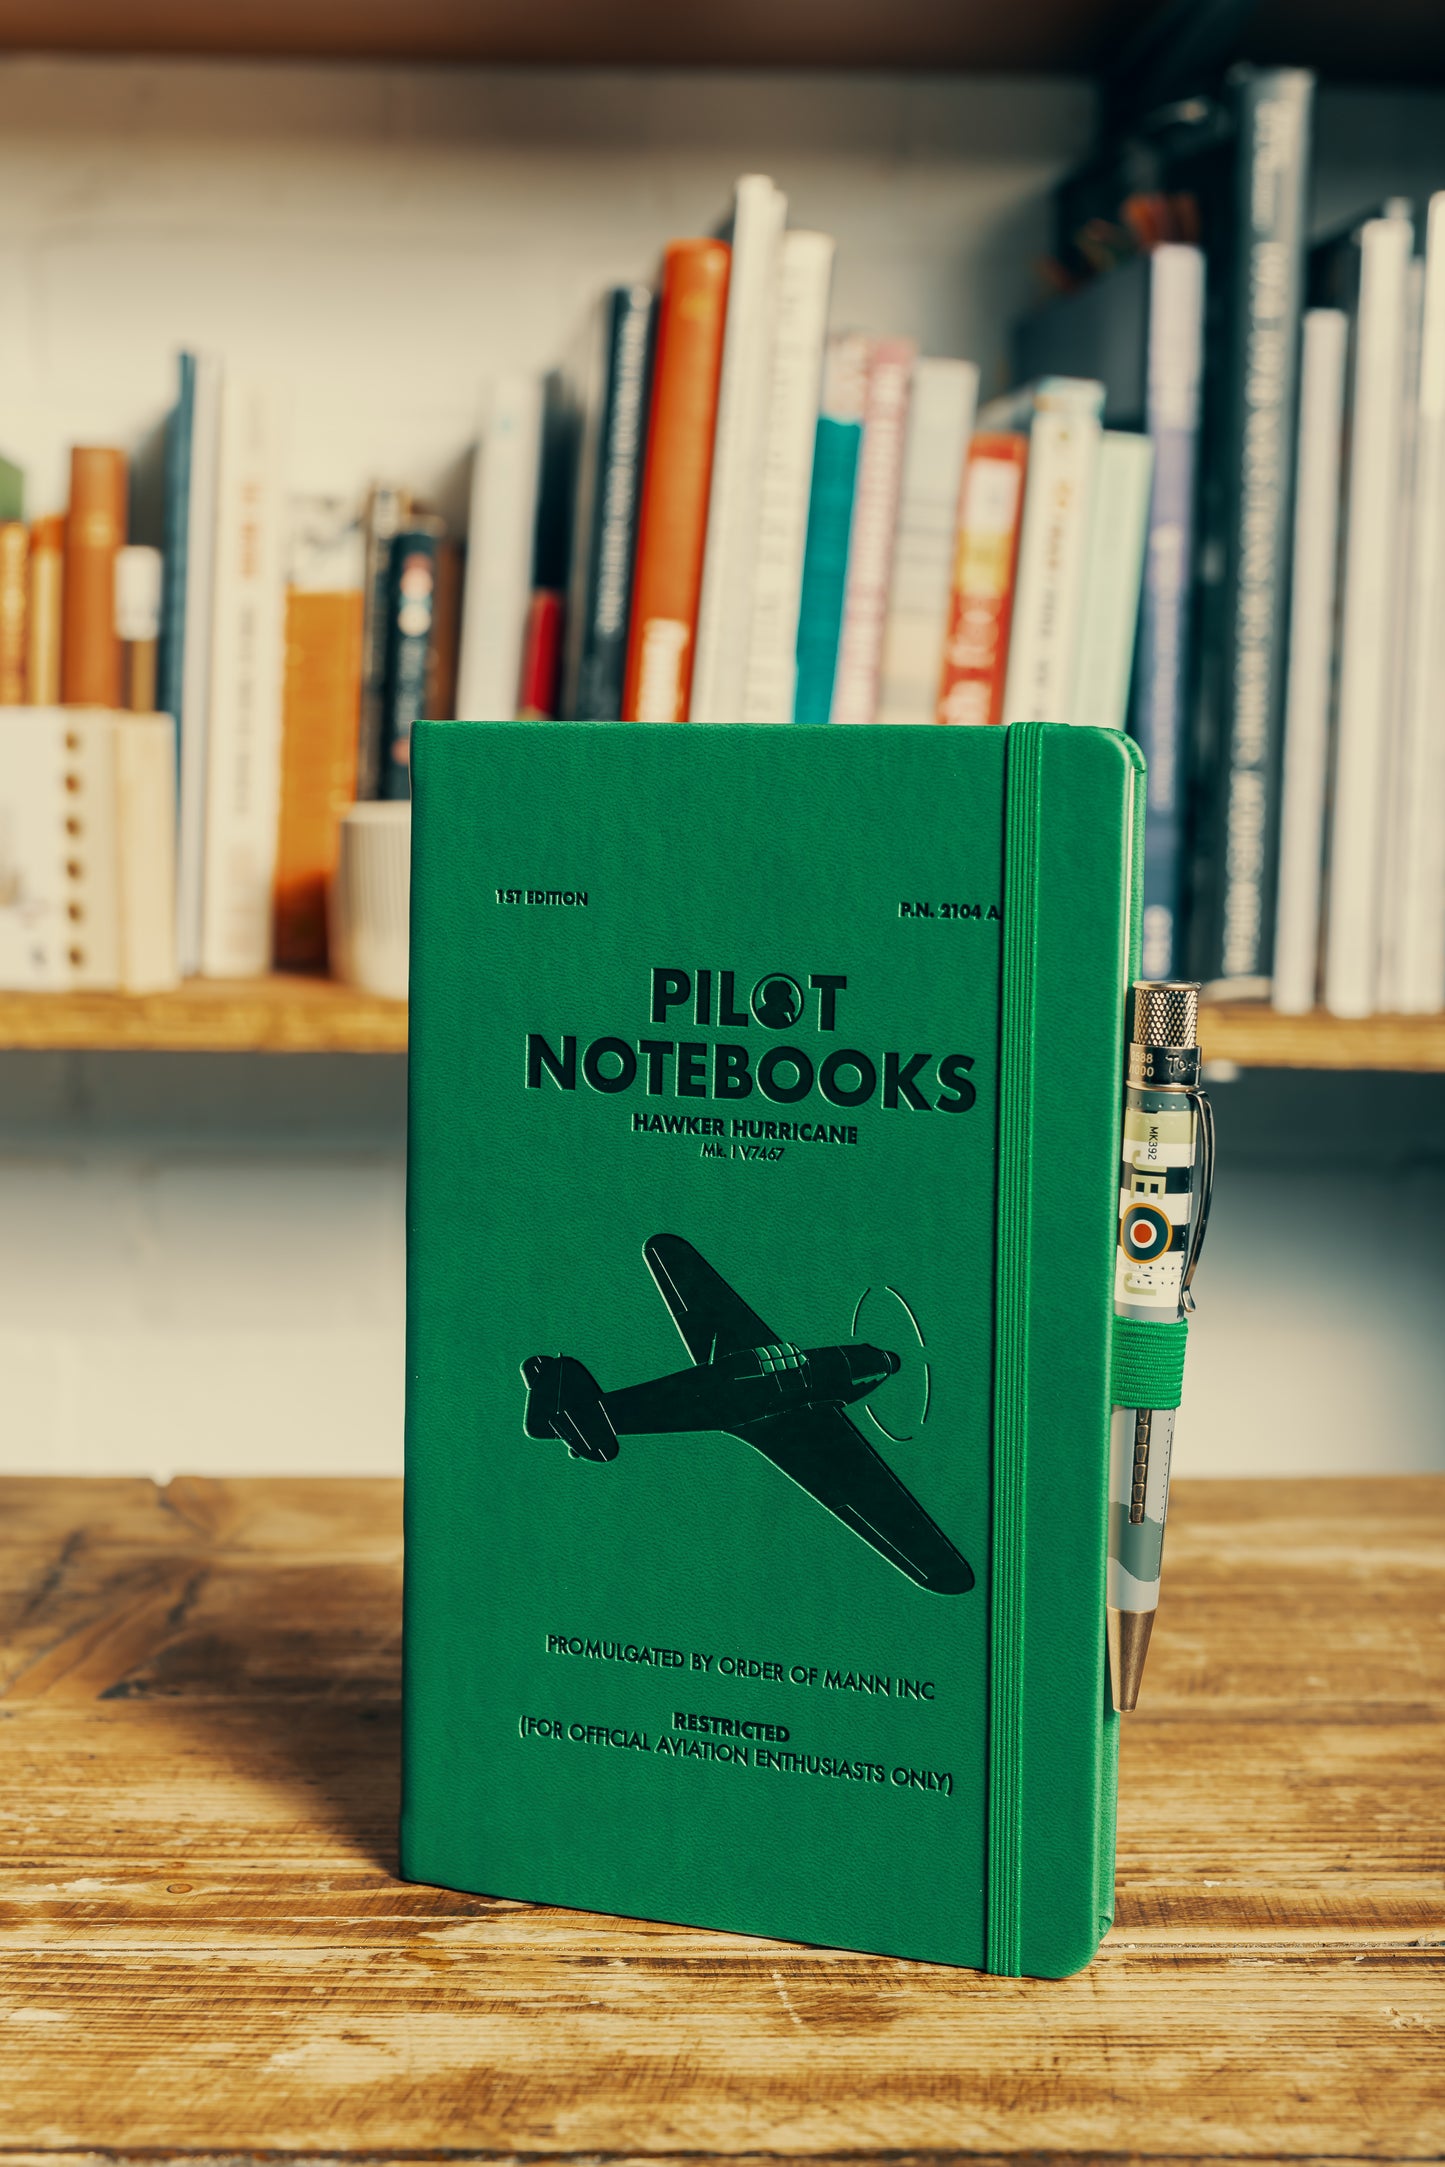 Pilot Notebooks - Hurricane